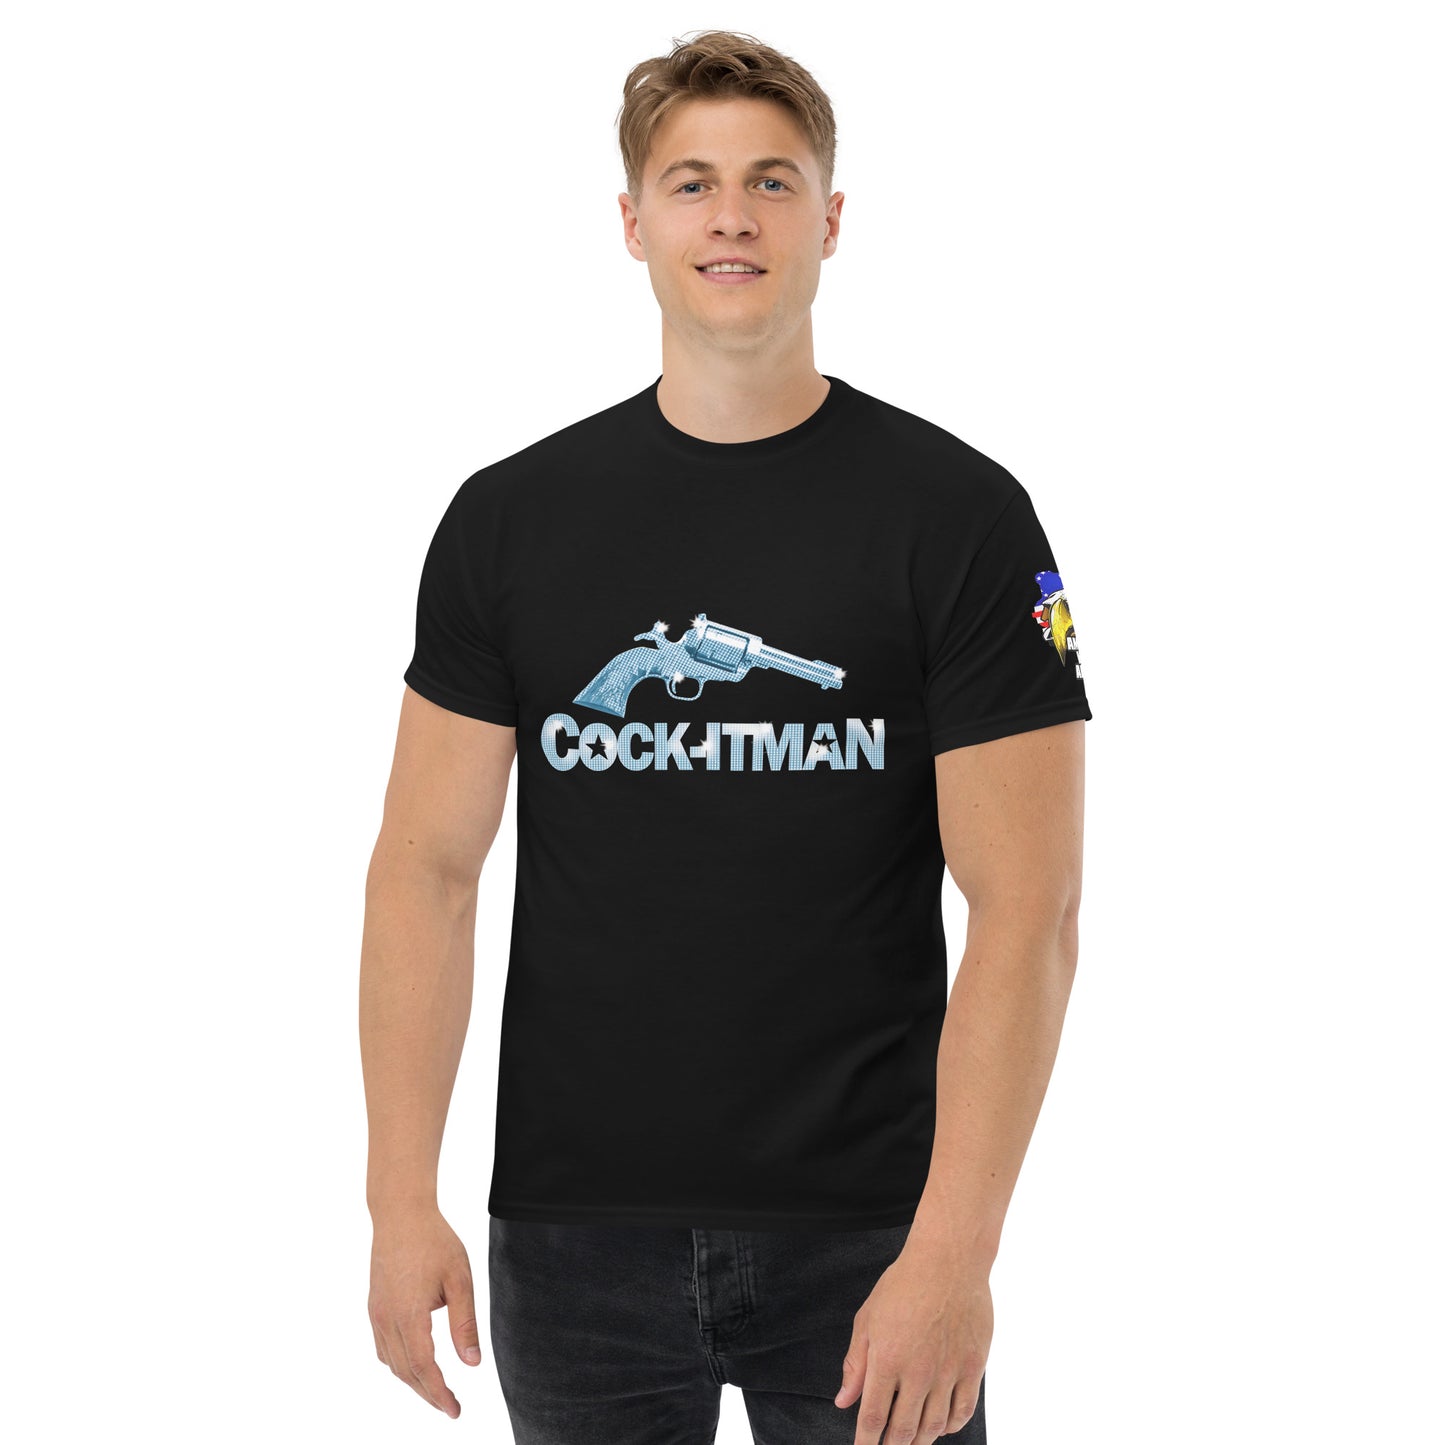 Cockitman- Rocketman Parody